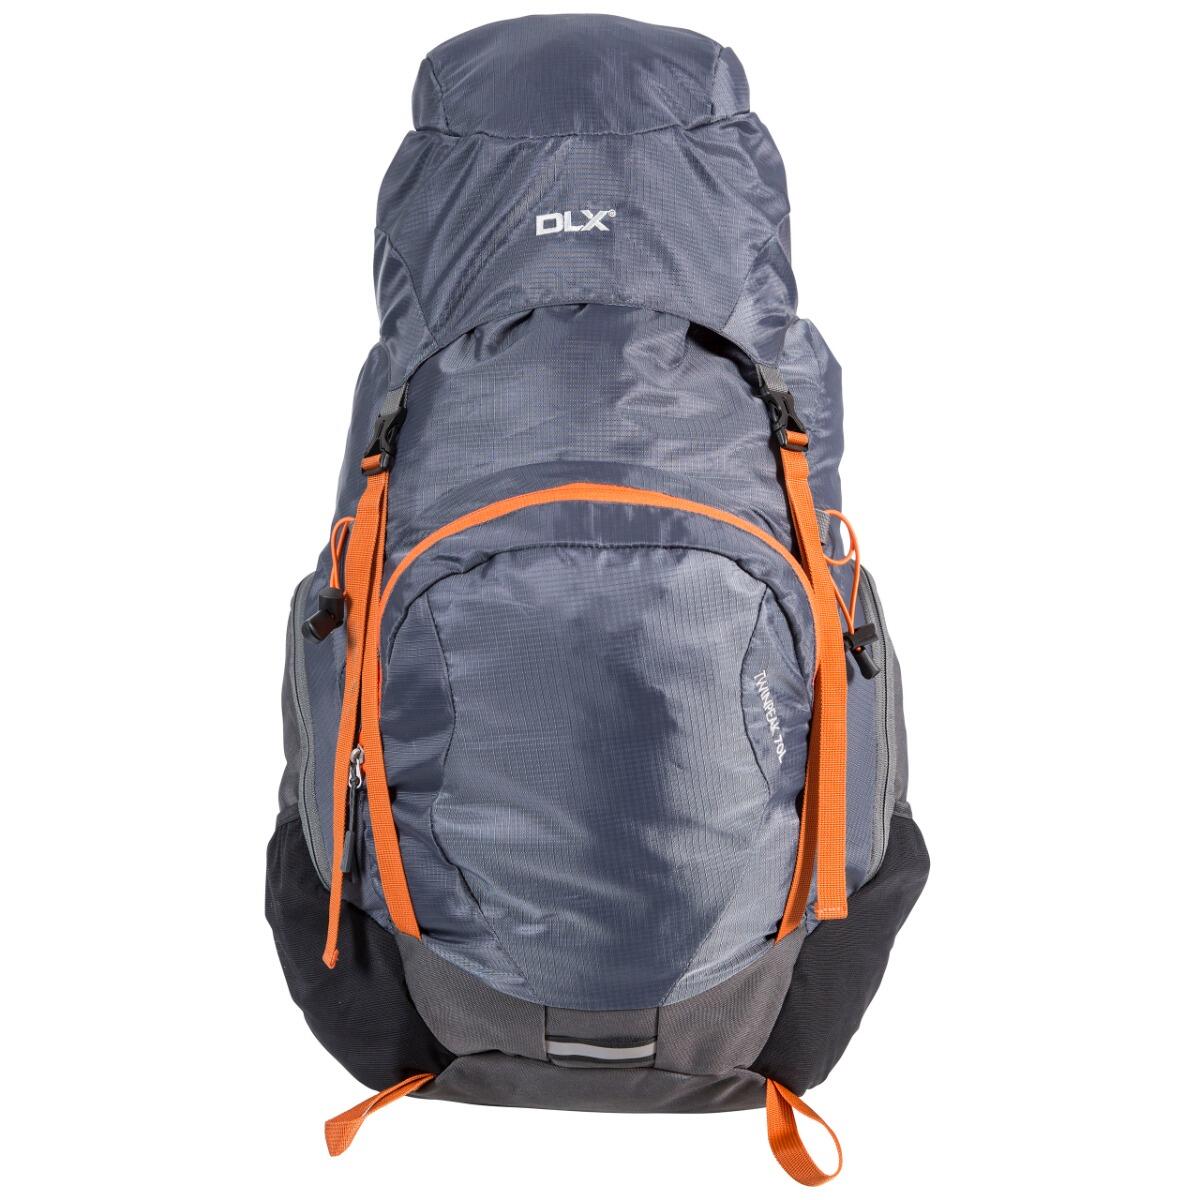 DLX 75L Rucksack Hiking Backpack with Hi Visibility Raincover Twinpeak